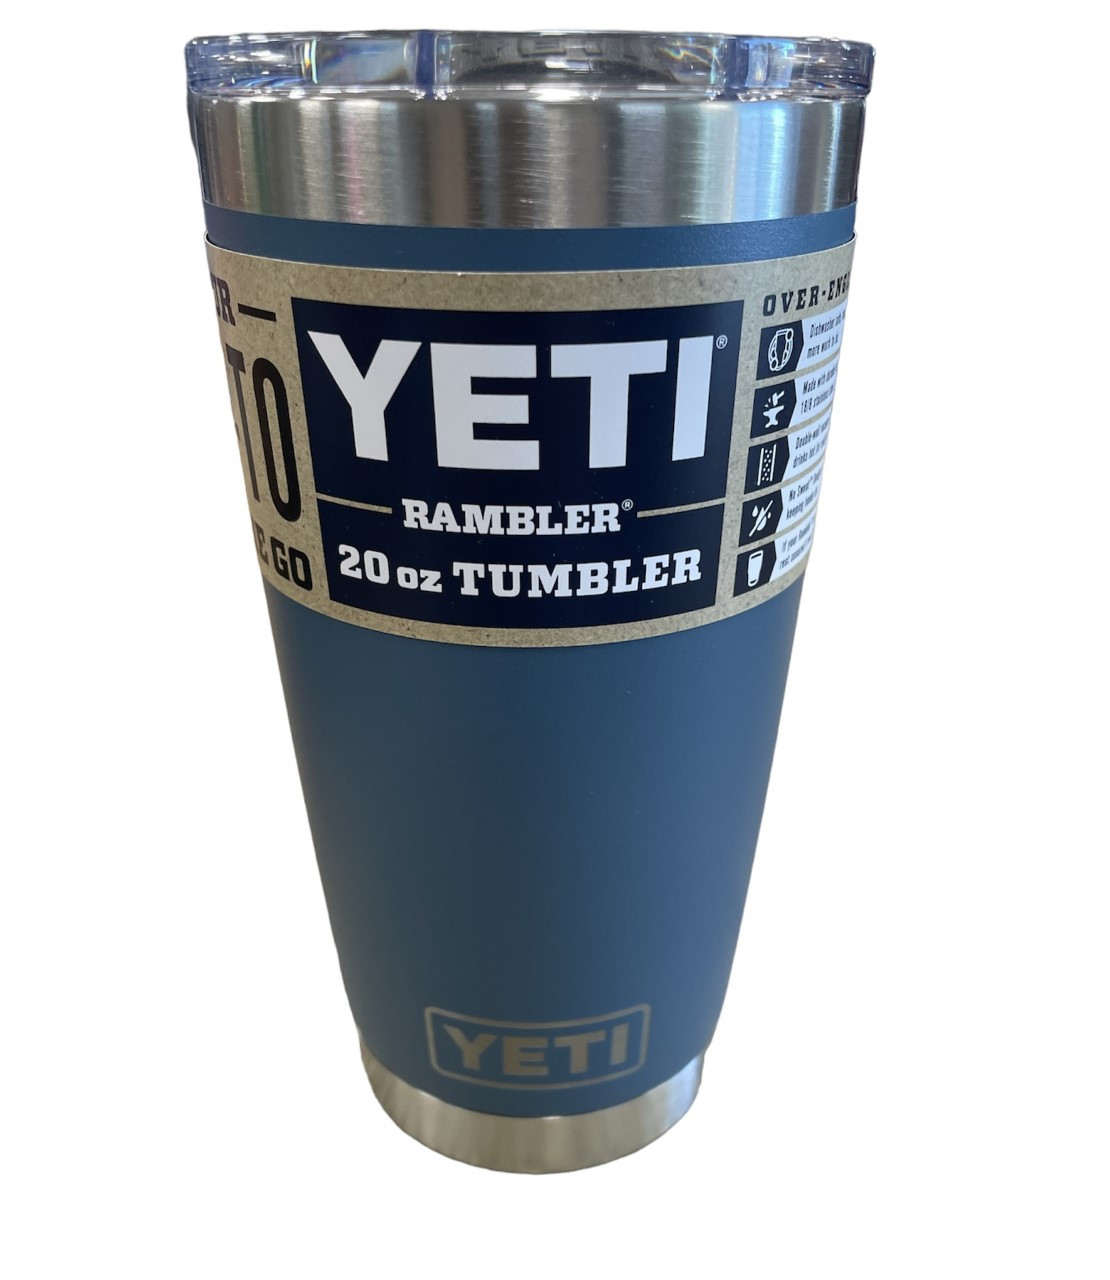 YETI Rambler 20 oz Tumbler - Nordic Blue